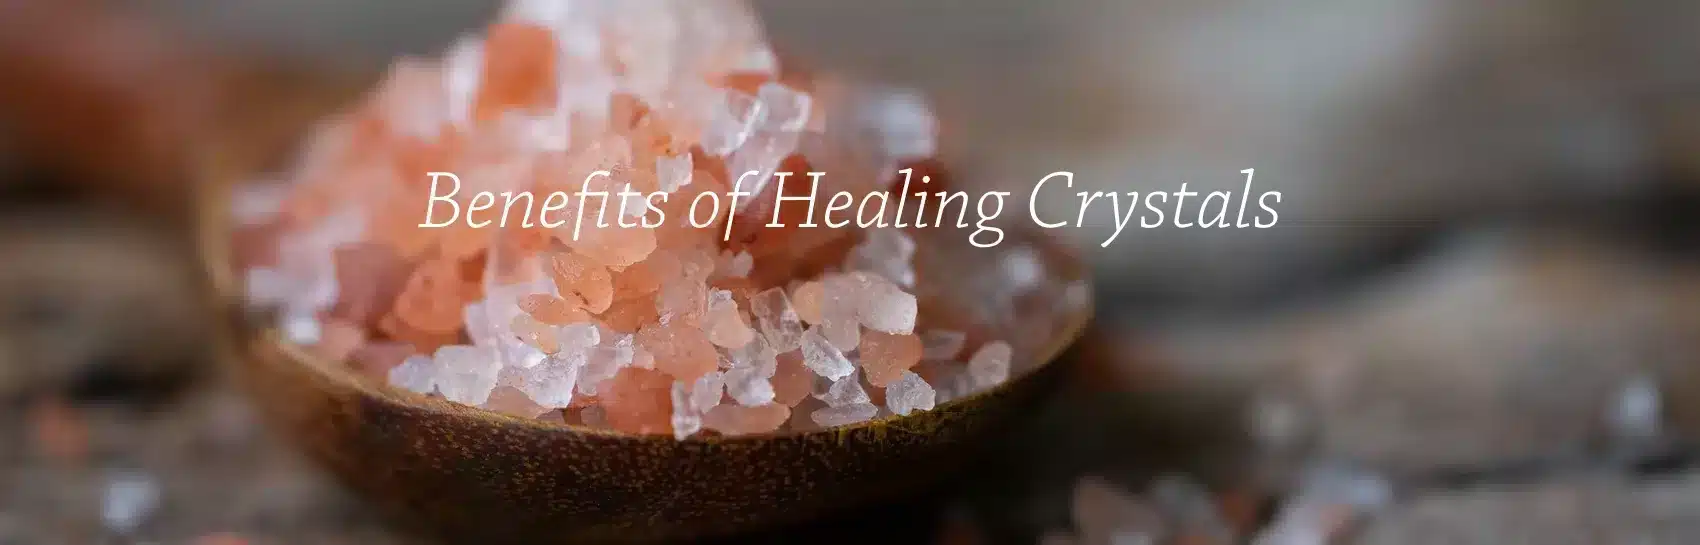 benefits of healing crystals